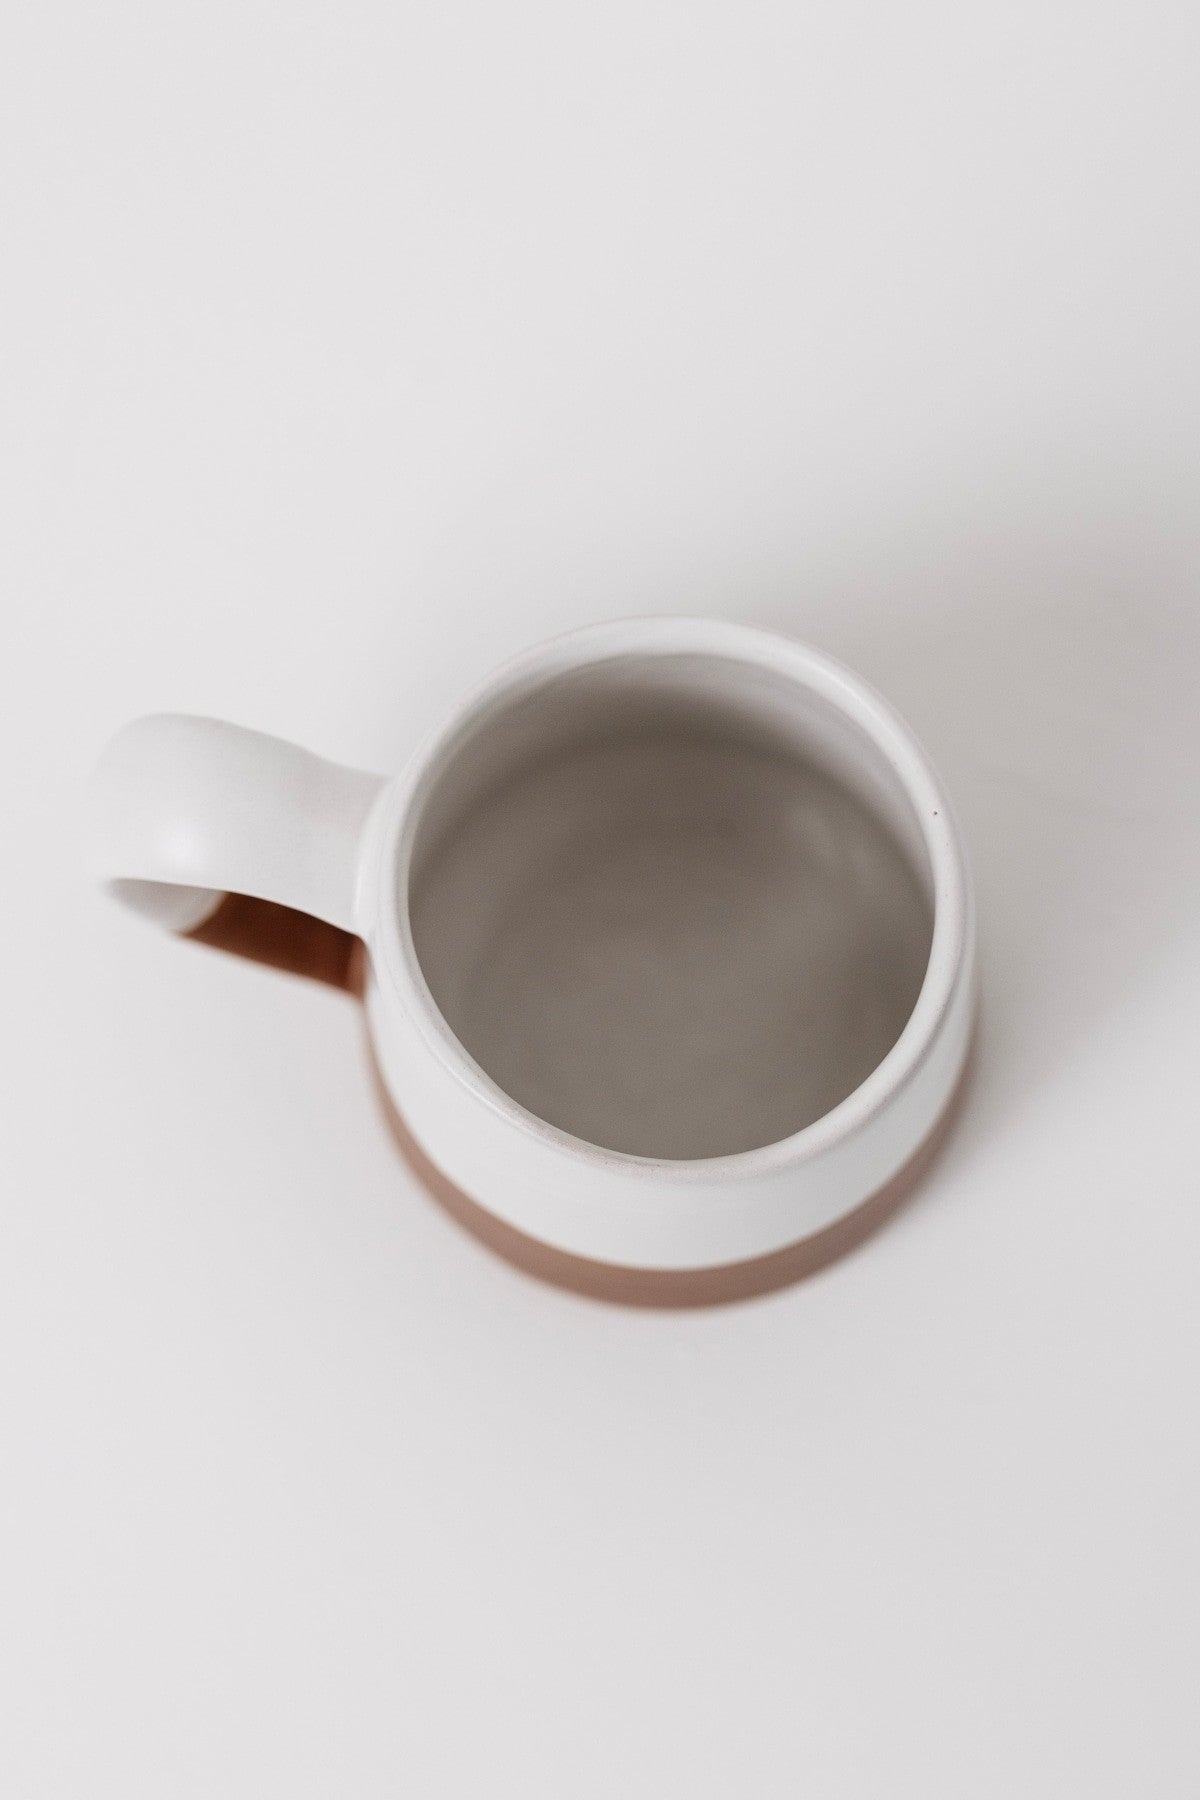 Waylon Hand Dipped Mug - Brown/White - Set of 4